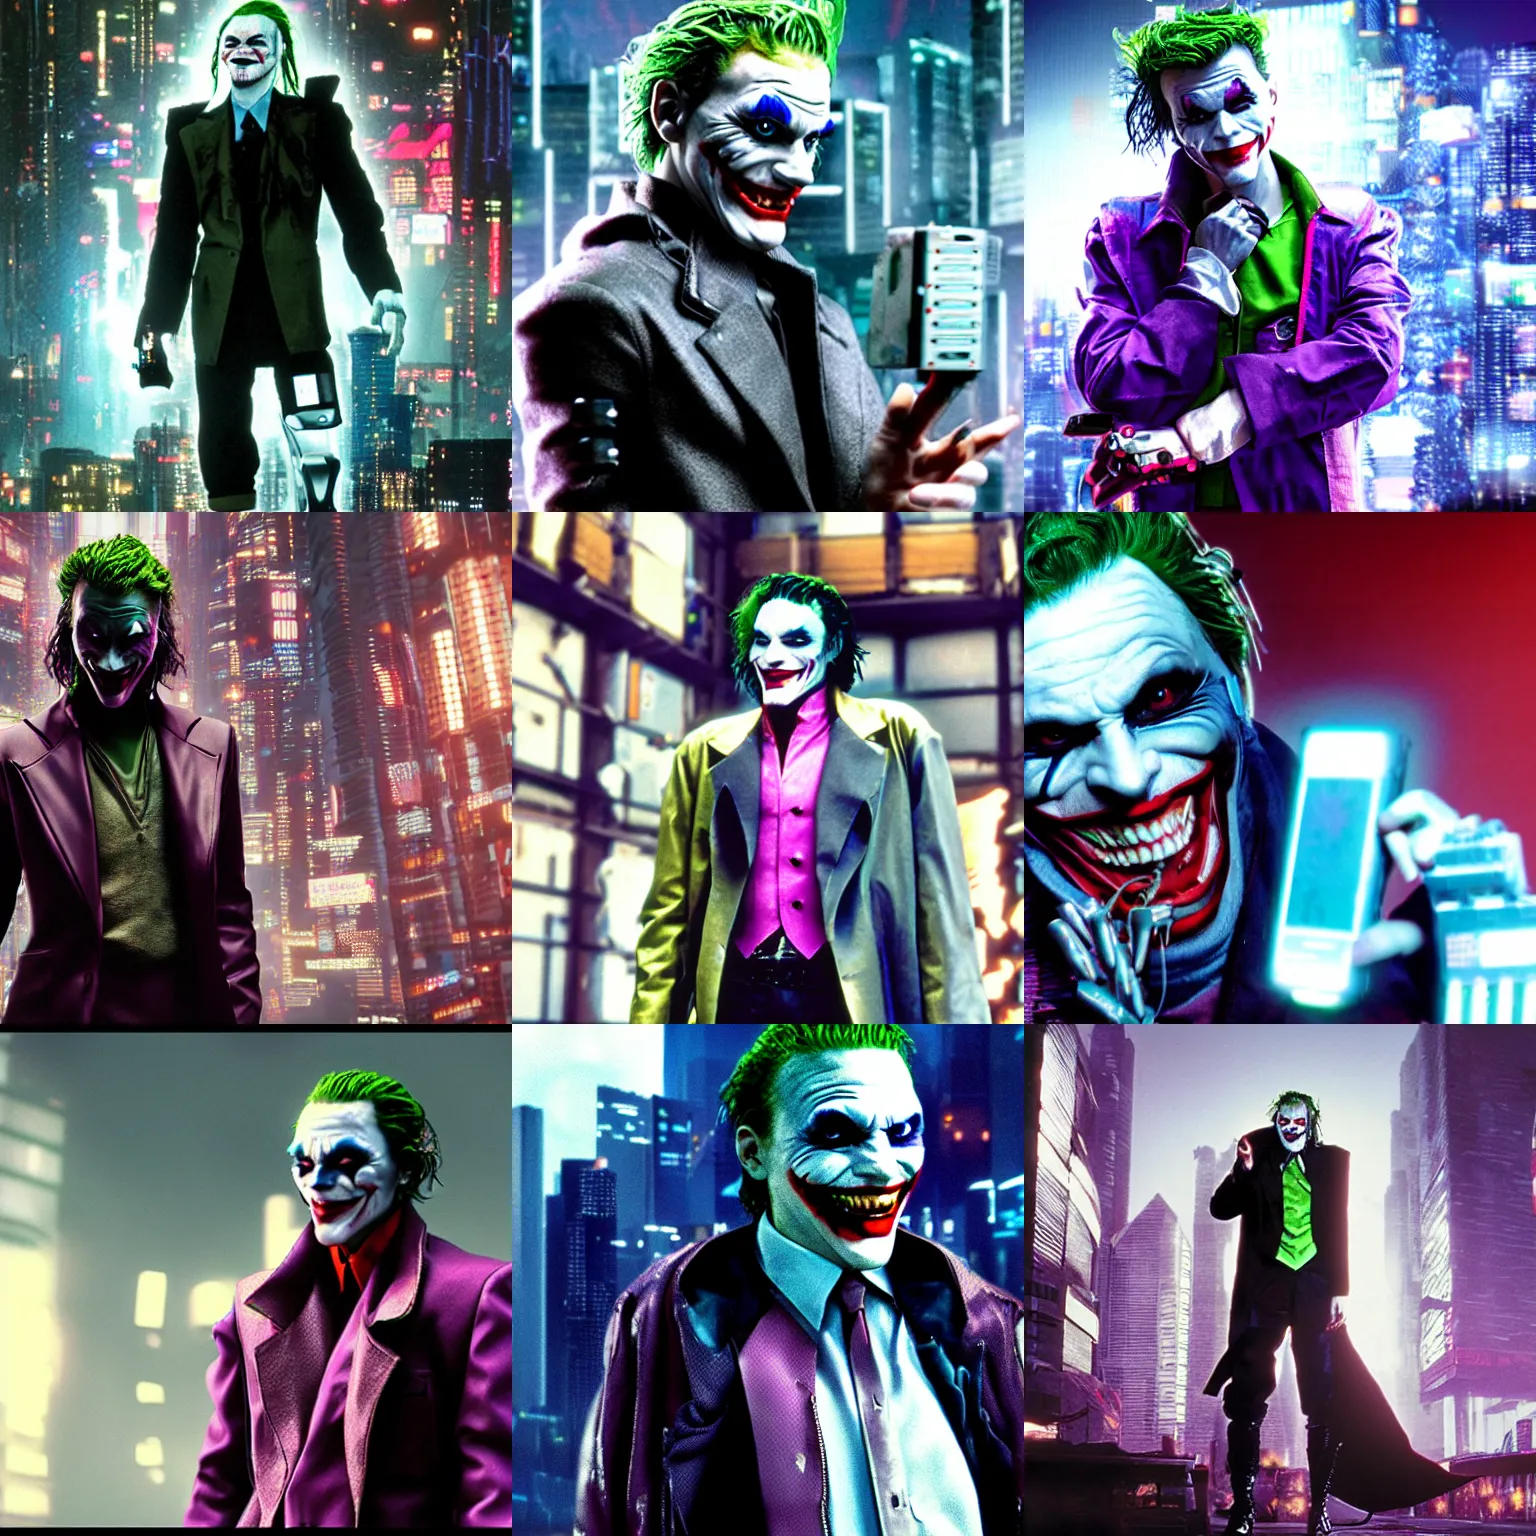 Prompt: Cyberpunk Joker full of cyberware, film still